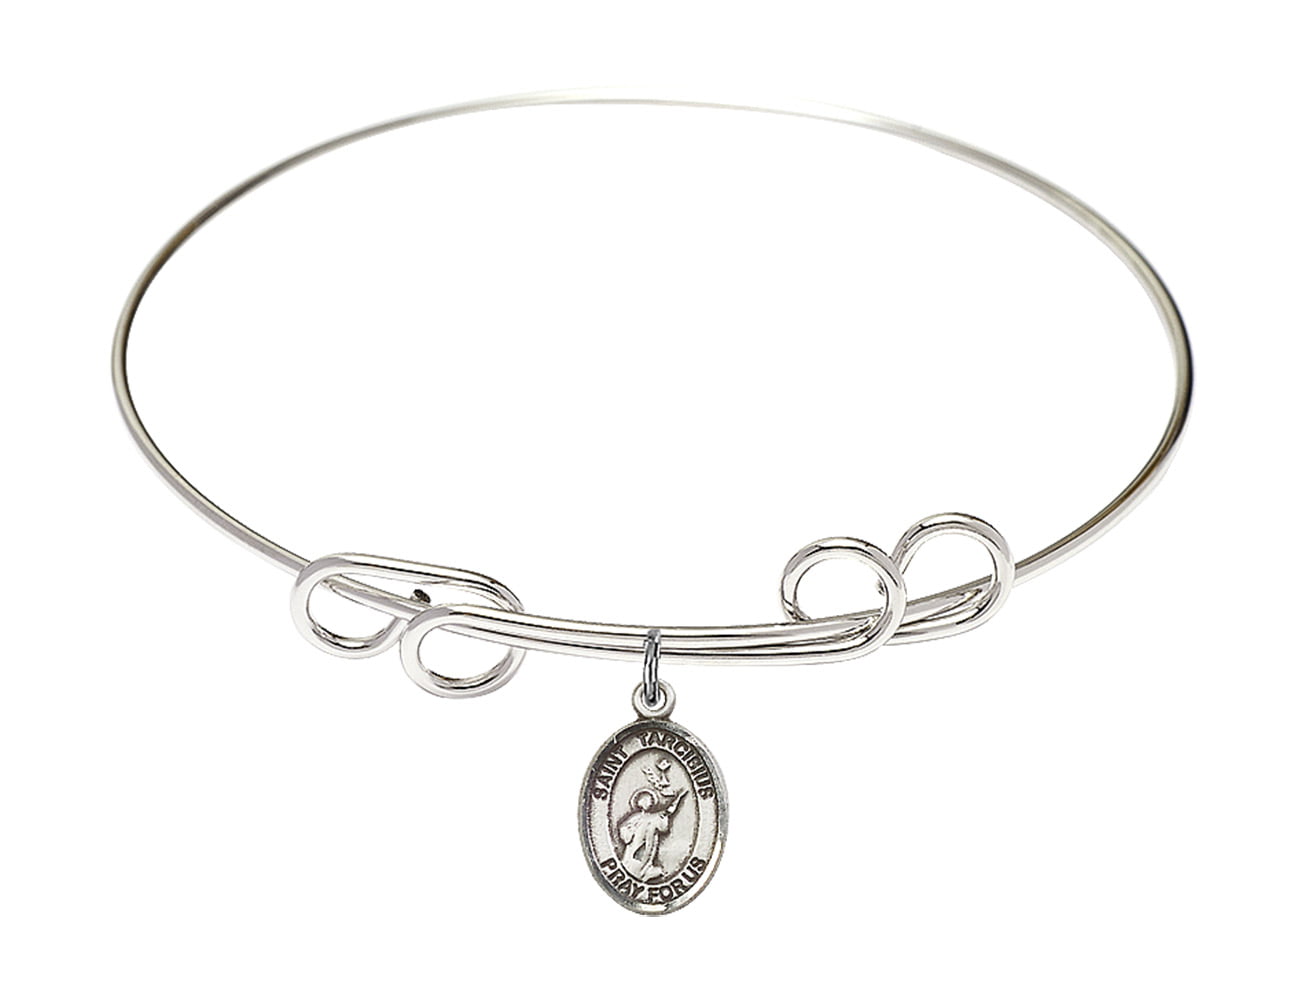 DiamondJewelryNY Eye Hook Bangle Bracelet with a St Tarcisius Charm.